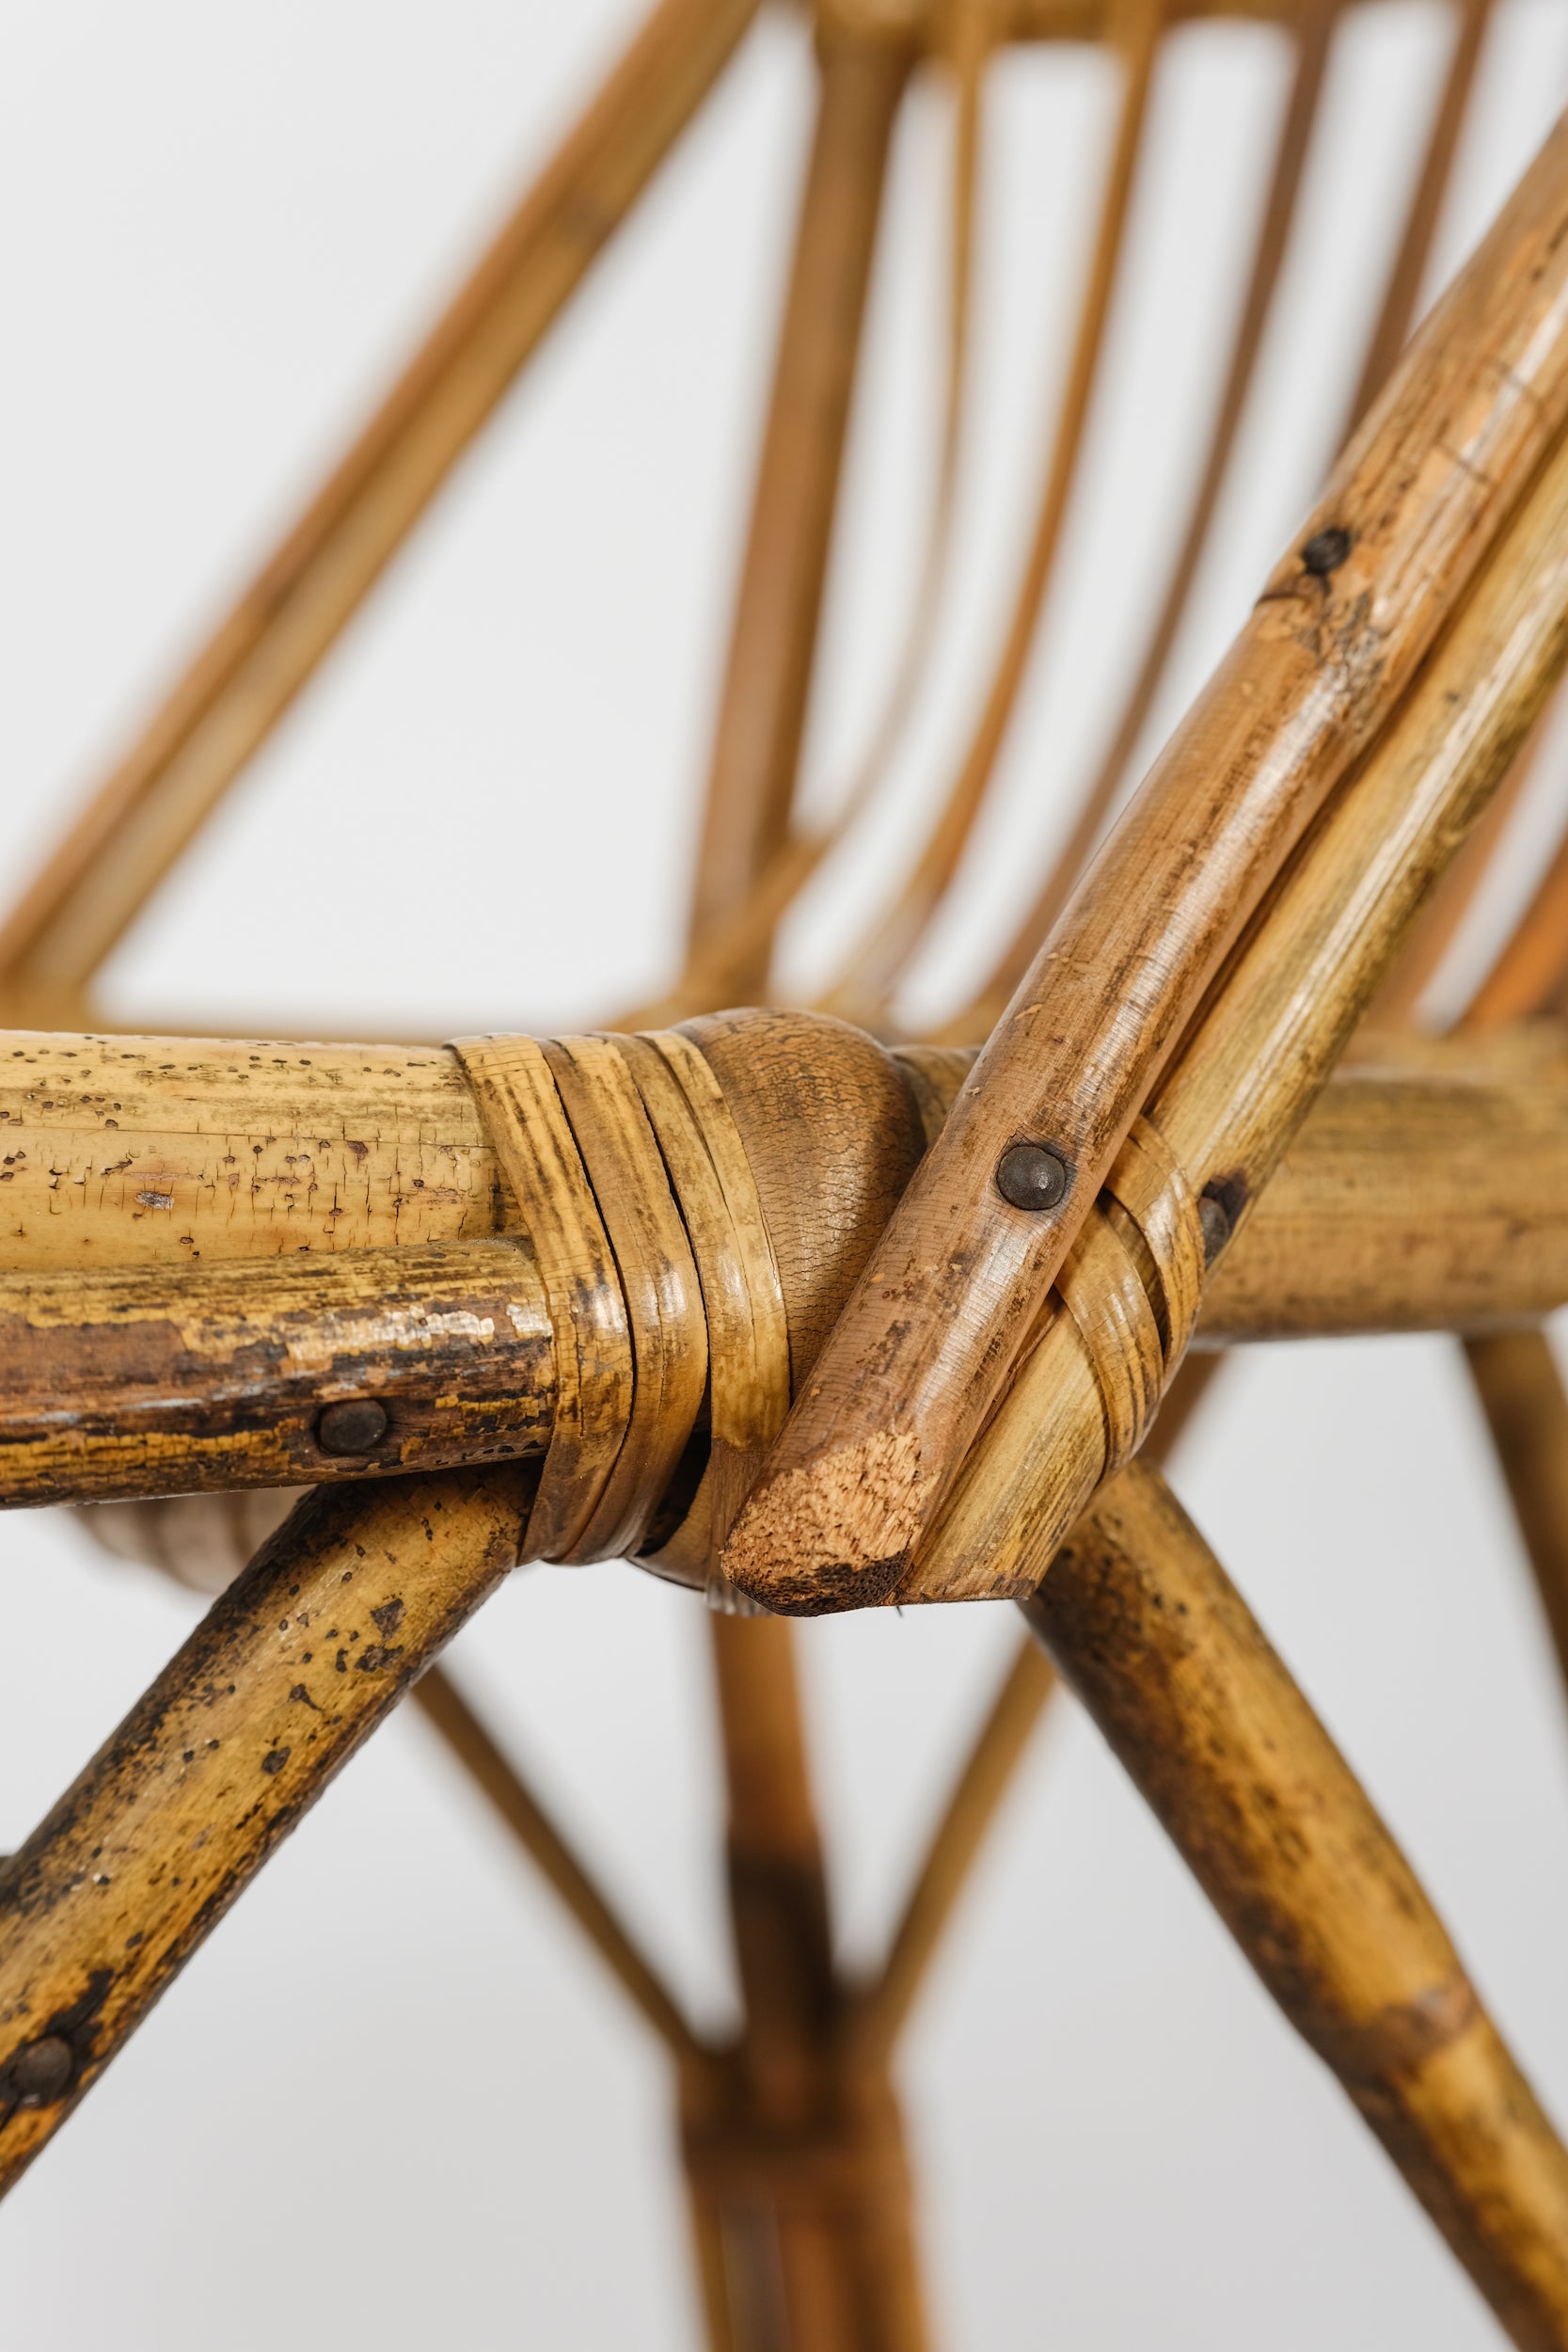 Bonacina bamboo raffia braid chair 50s Italy